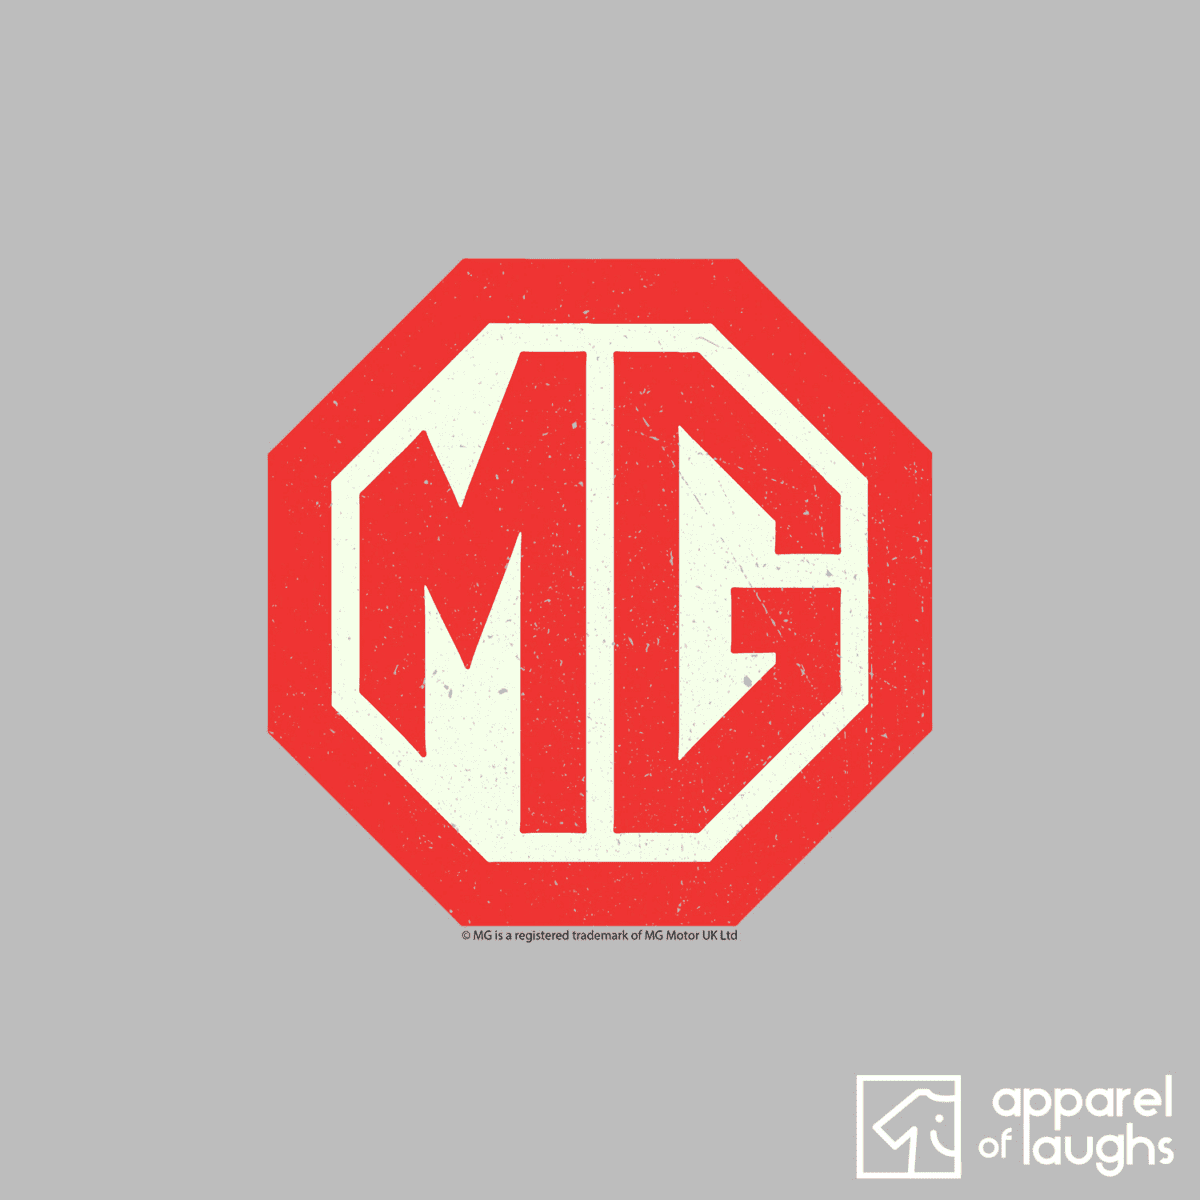 MG Car Brand Logo Vintage Retro British Leyland Motoring Automotive T-Shirt Design Sports Grey